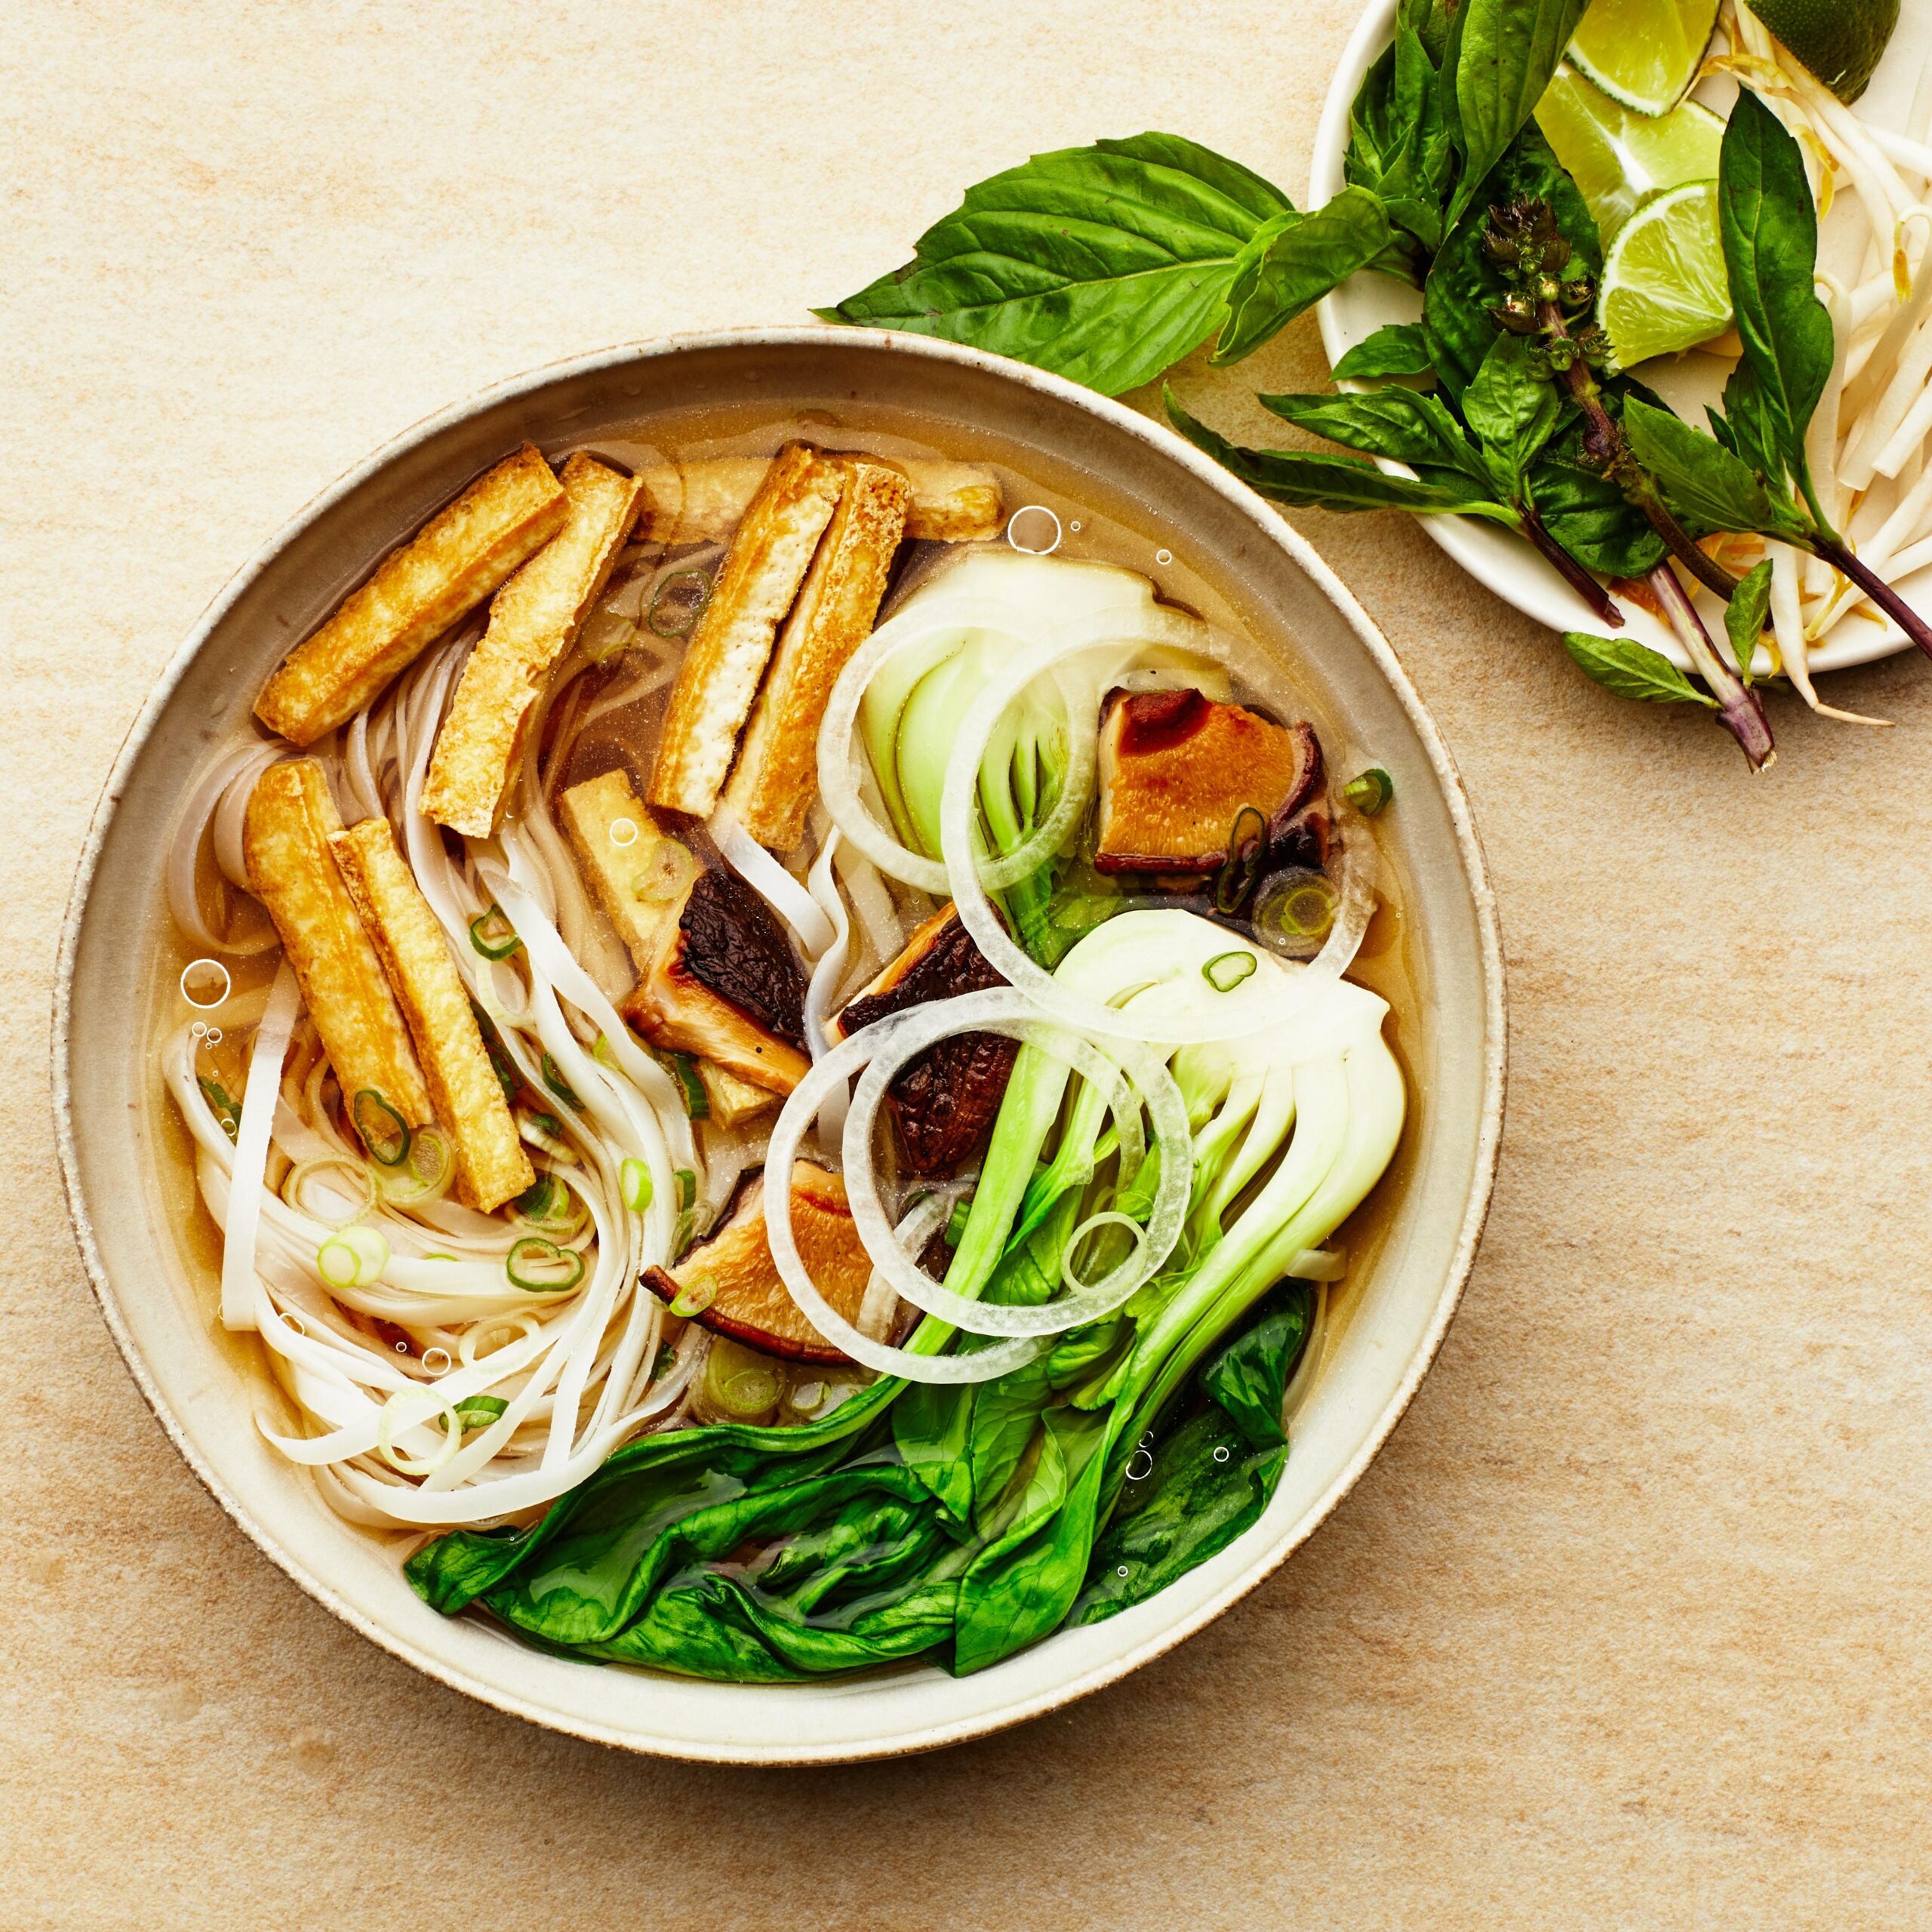  A vegetarian twist on a classic Vietnamese dish that's still full of flavor